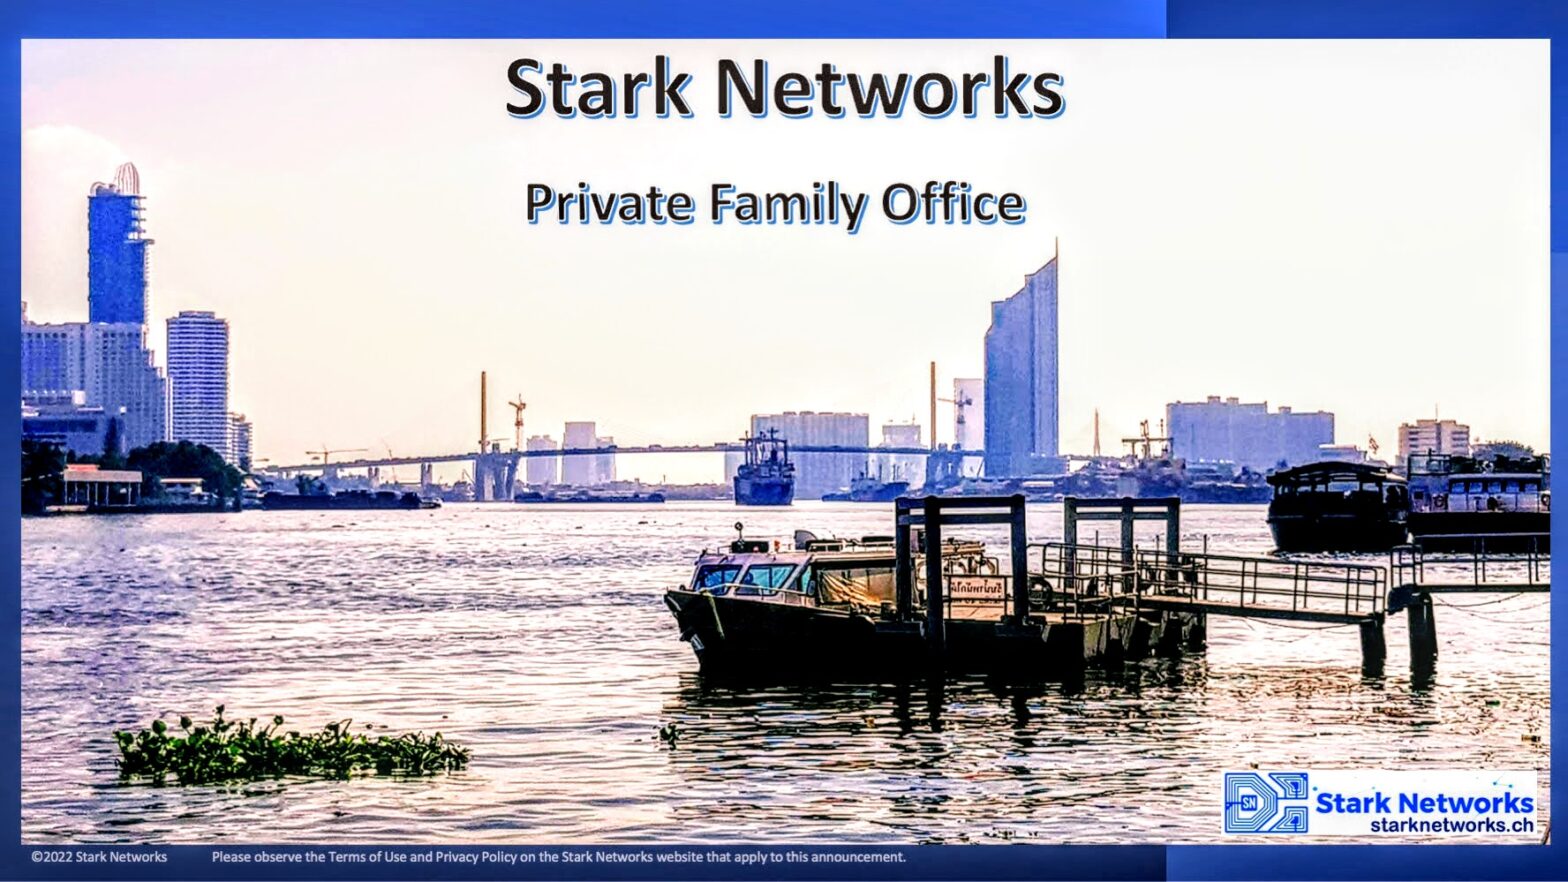 Stark Networks PFO